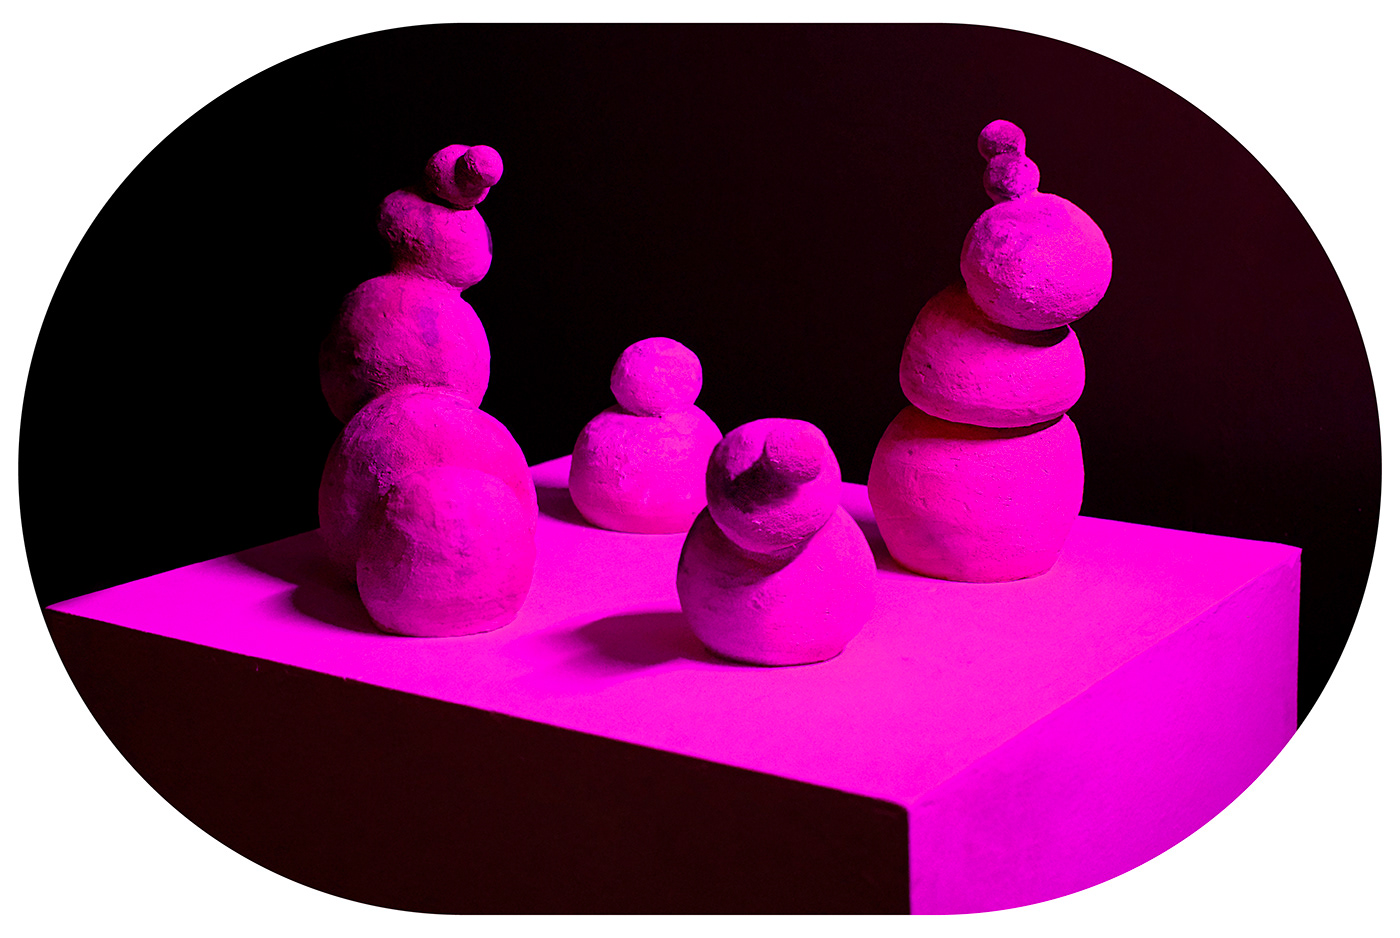 sculpture ceramics  fine art Exhibition  interactive installation 3D mushroom visual identity contemporary art